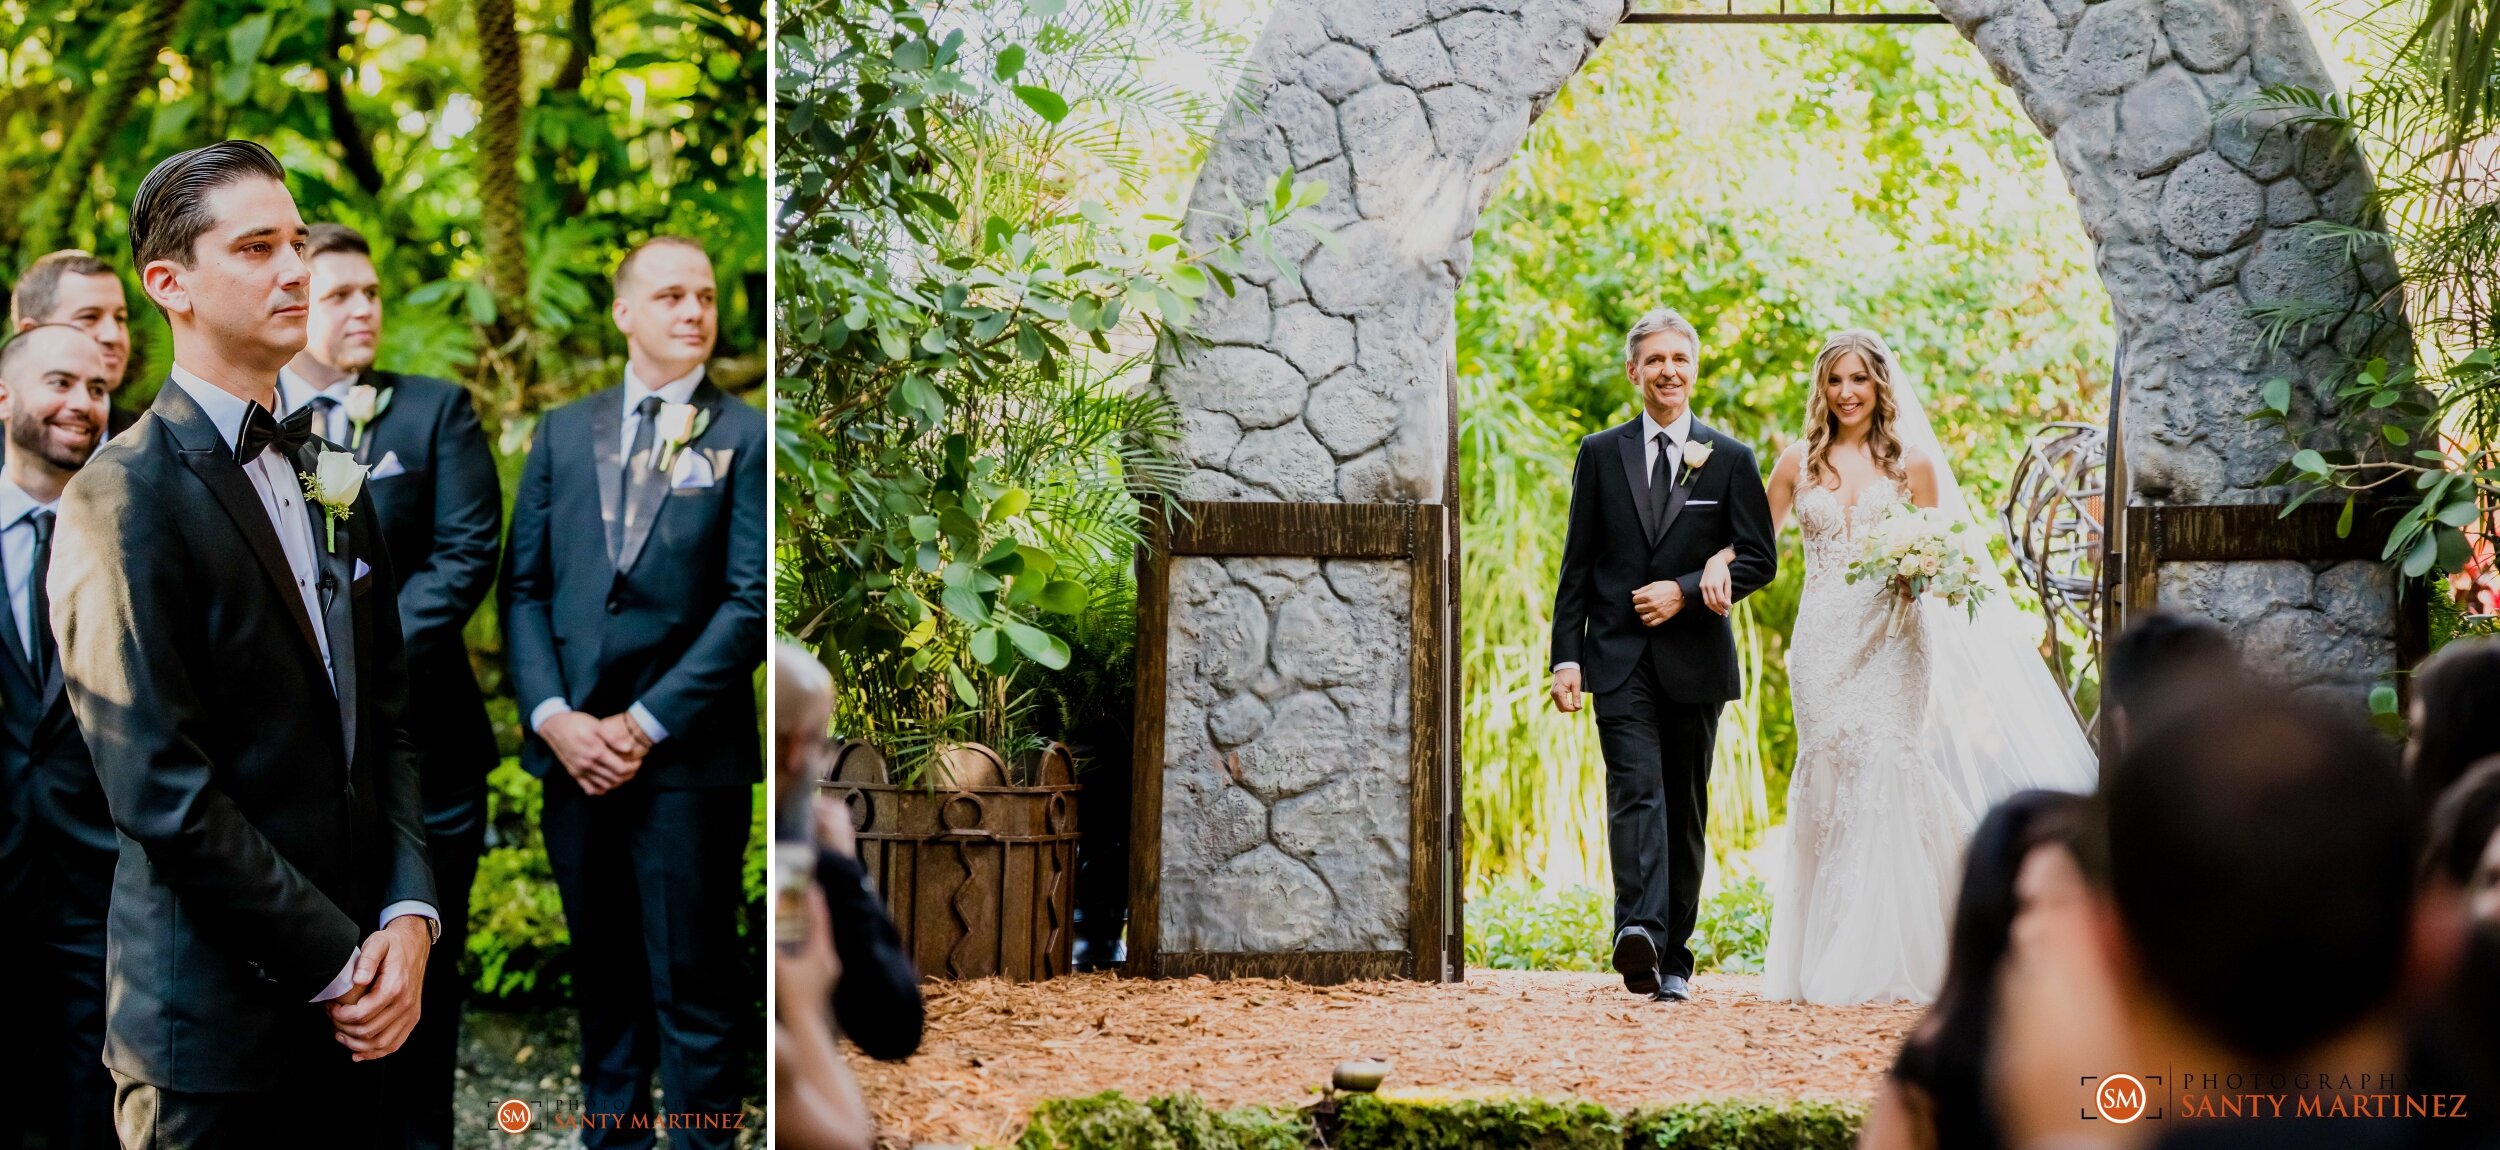 Wedding - The Cooper Estate - Photography by Santy Martinez 12.jpg